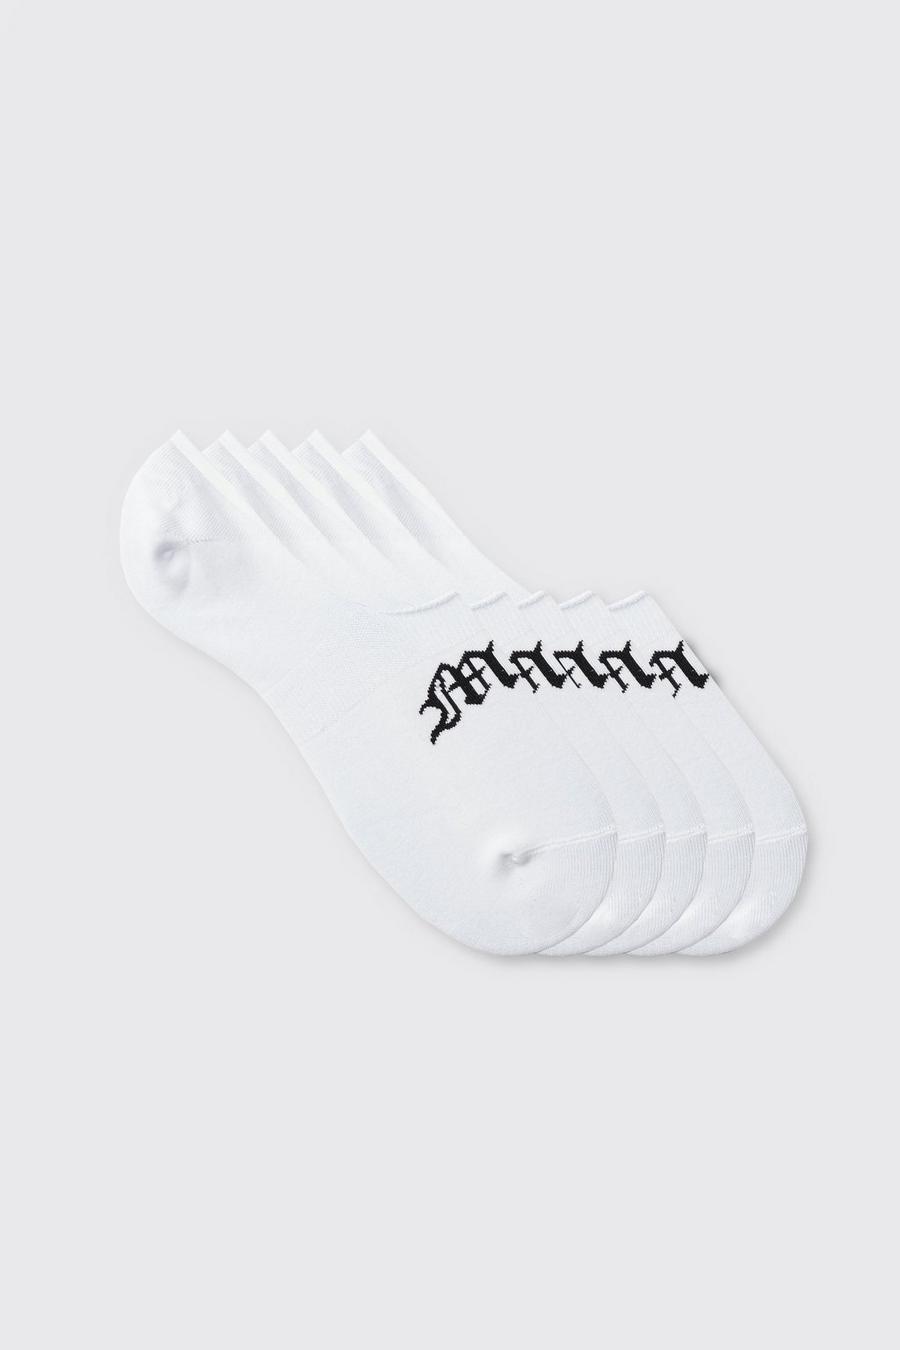 Pack de 5 pares de calcetines invisibles con letras MAN góticas, White